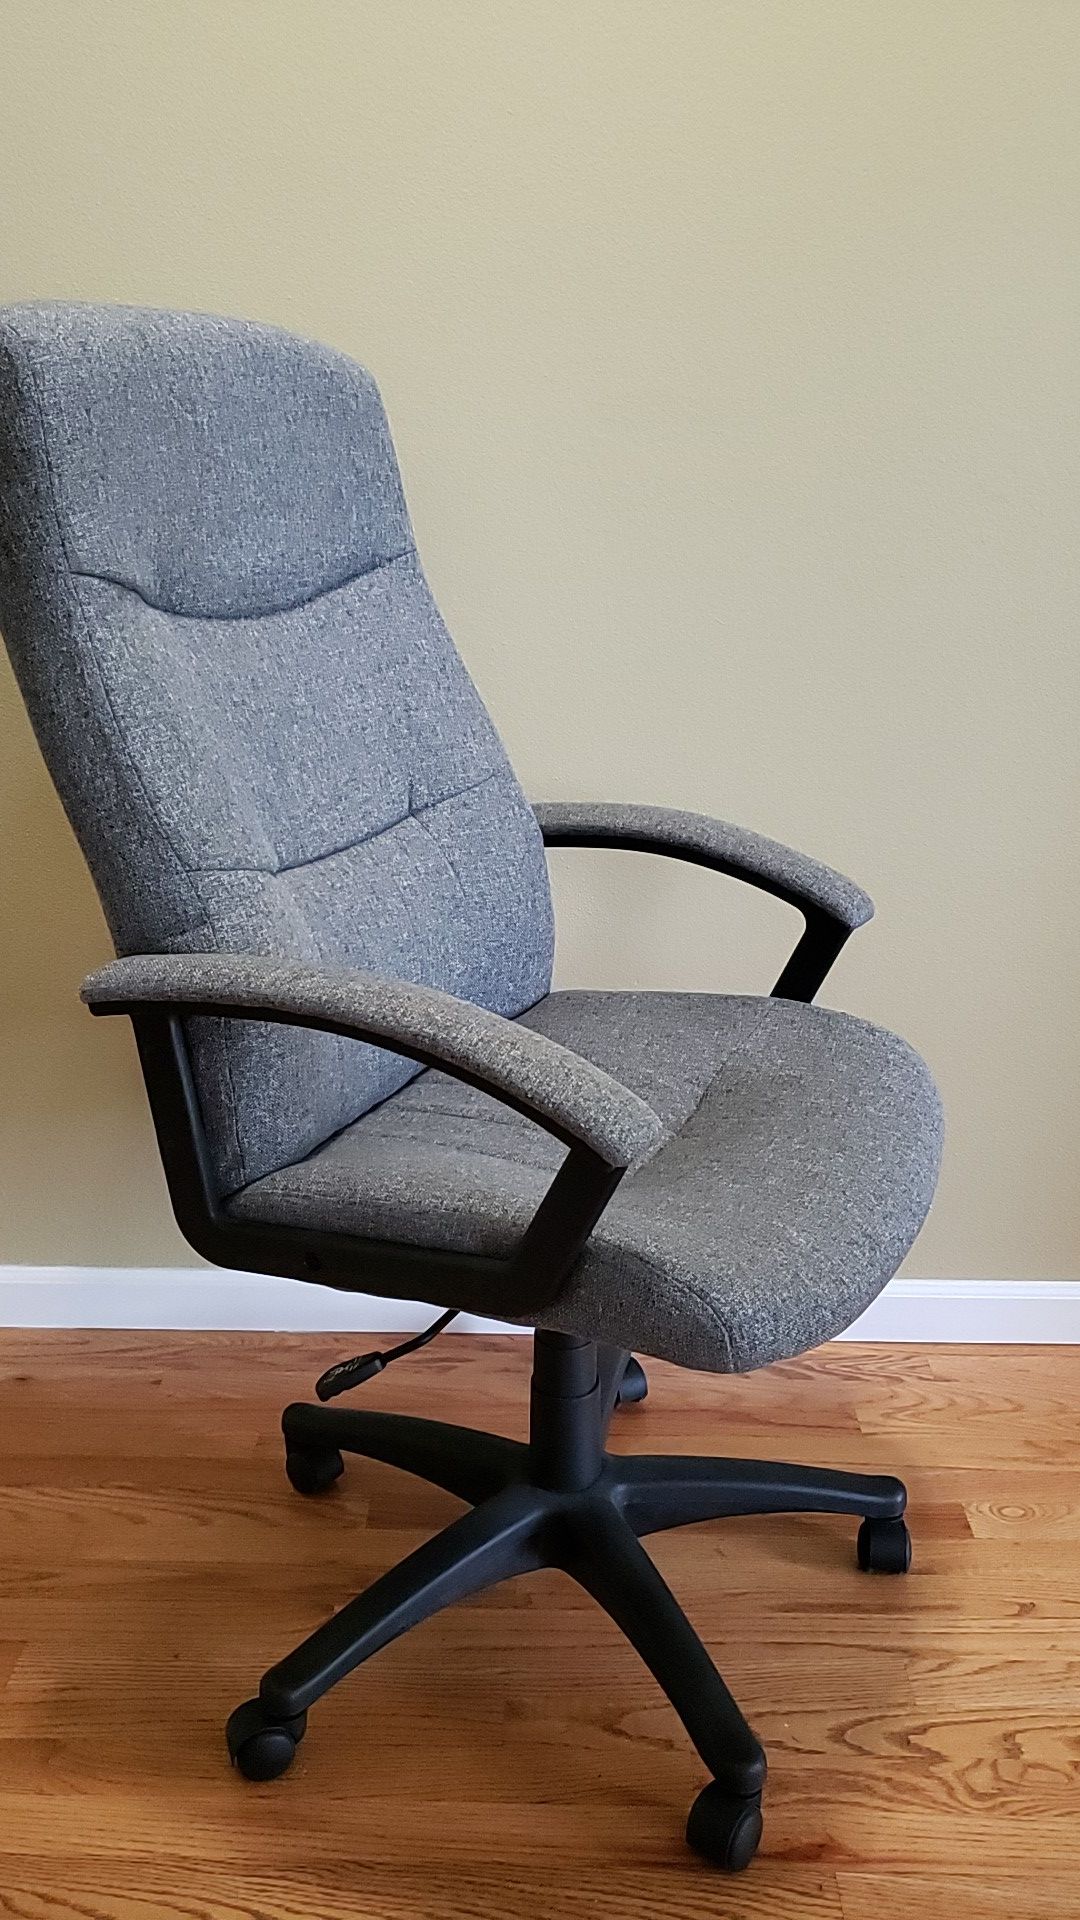 Comfortable desk chair